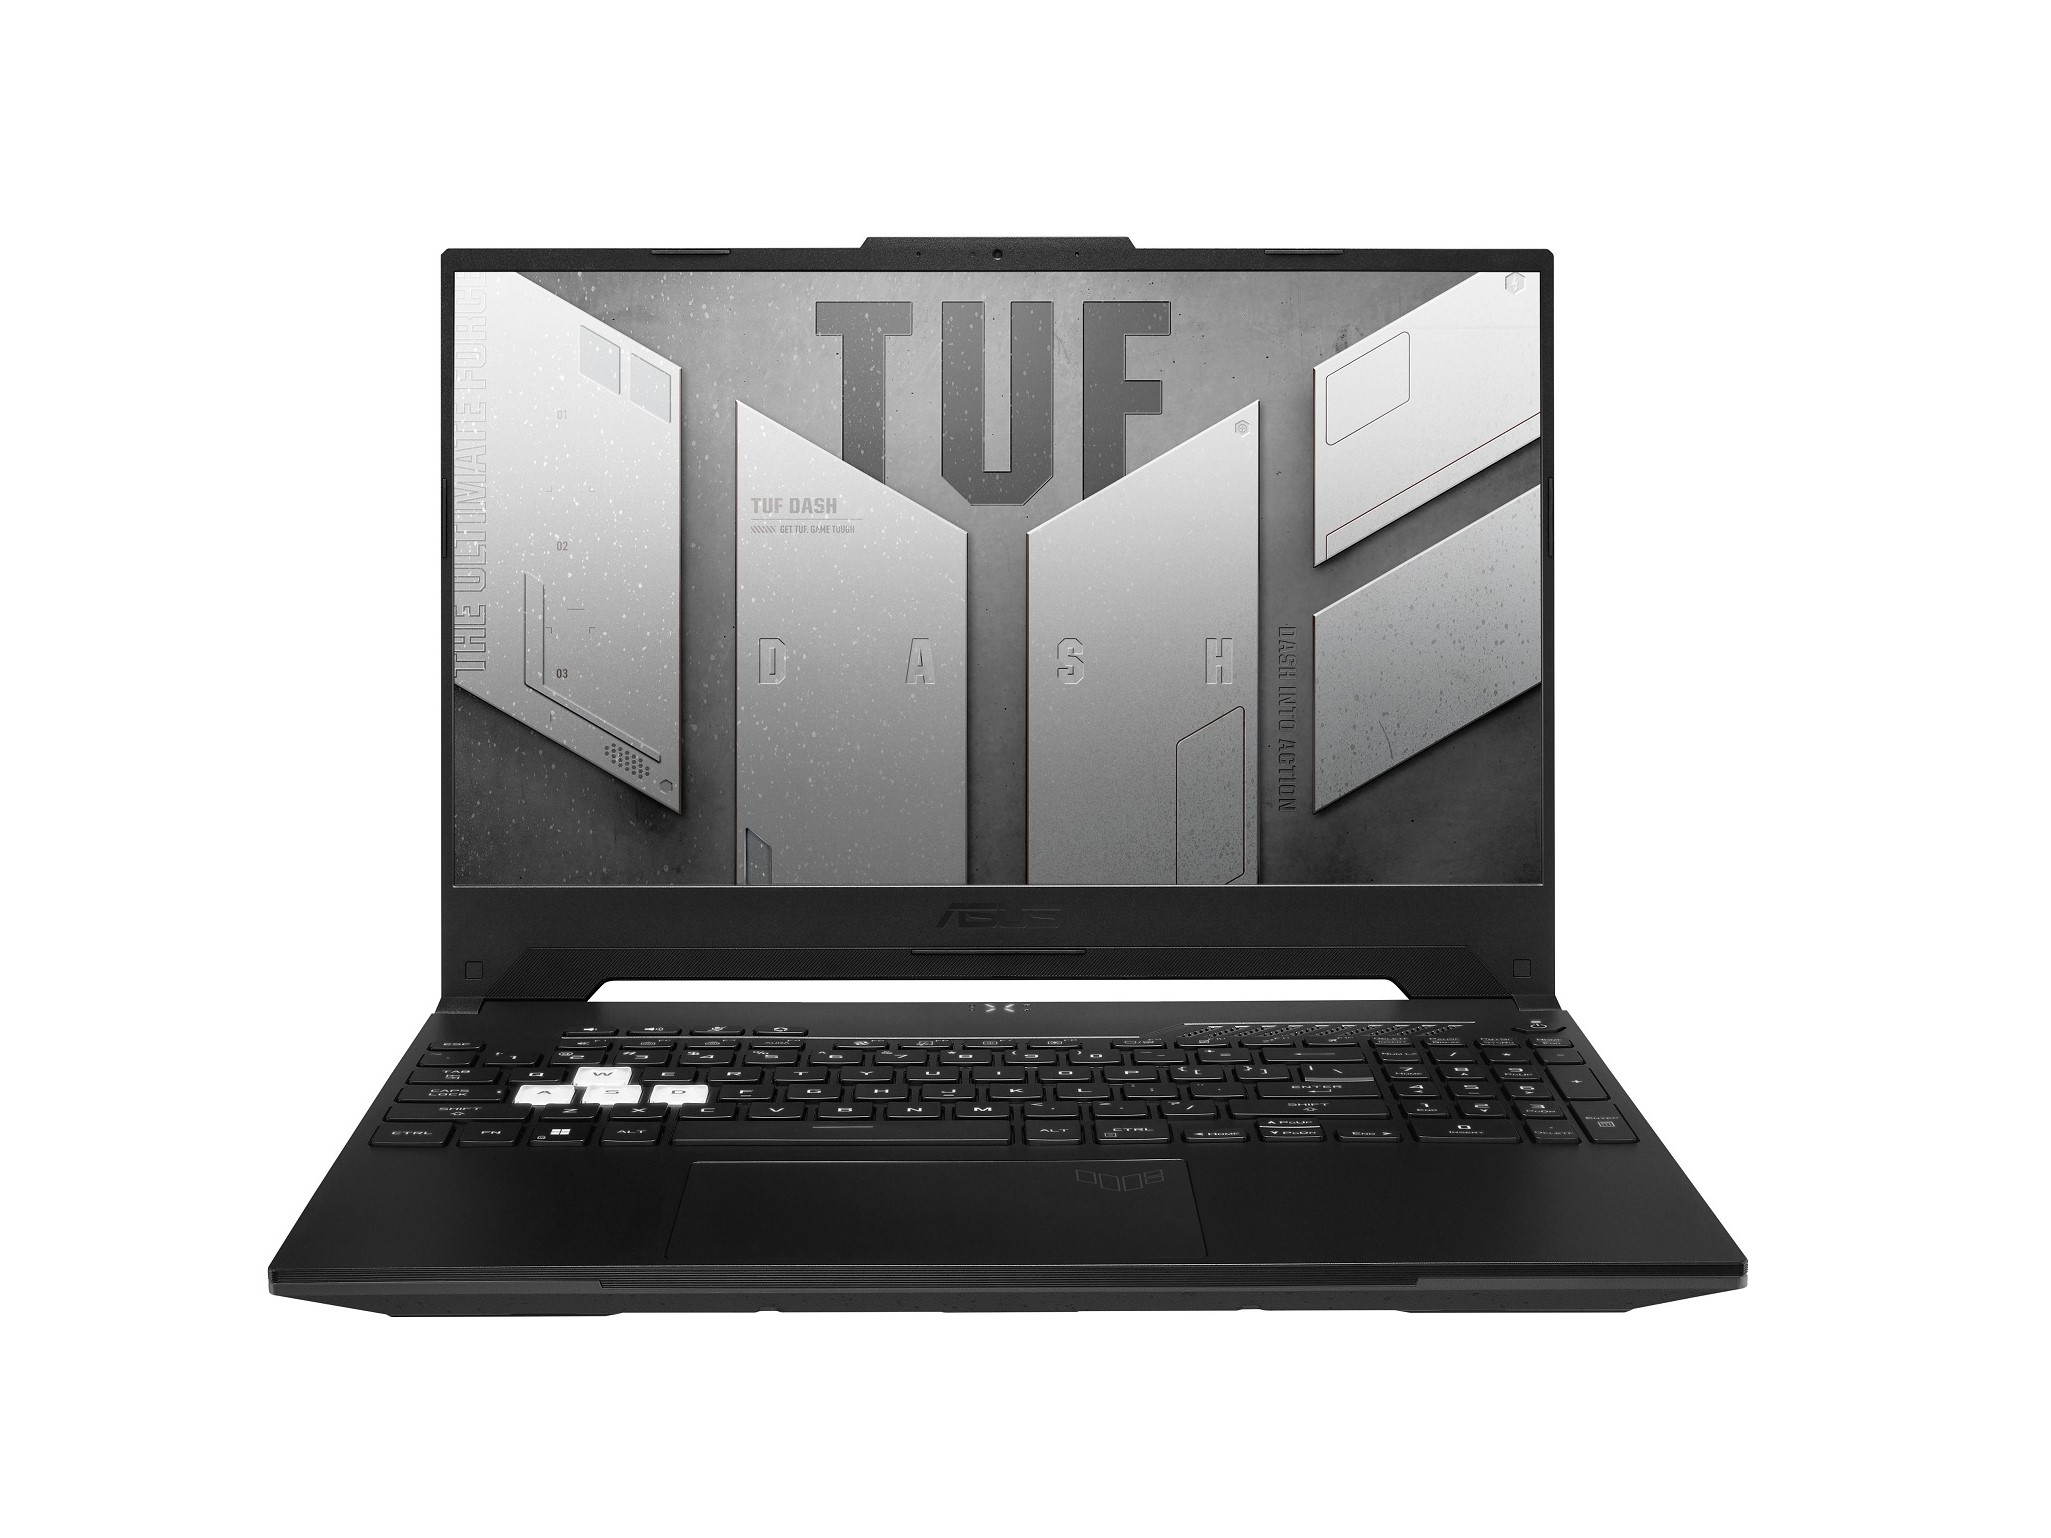 Asus TUF Dash 15 144Hz Gaming Laptop aberto e na imagem do produto.